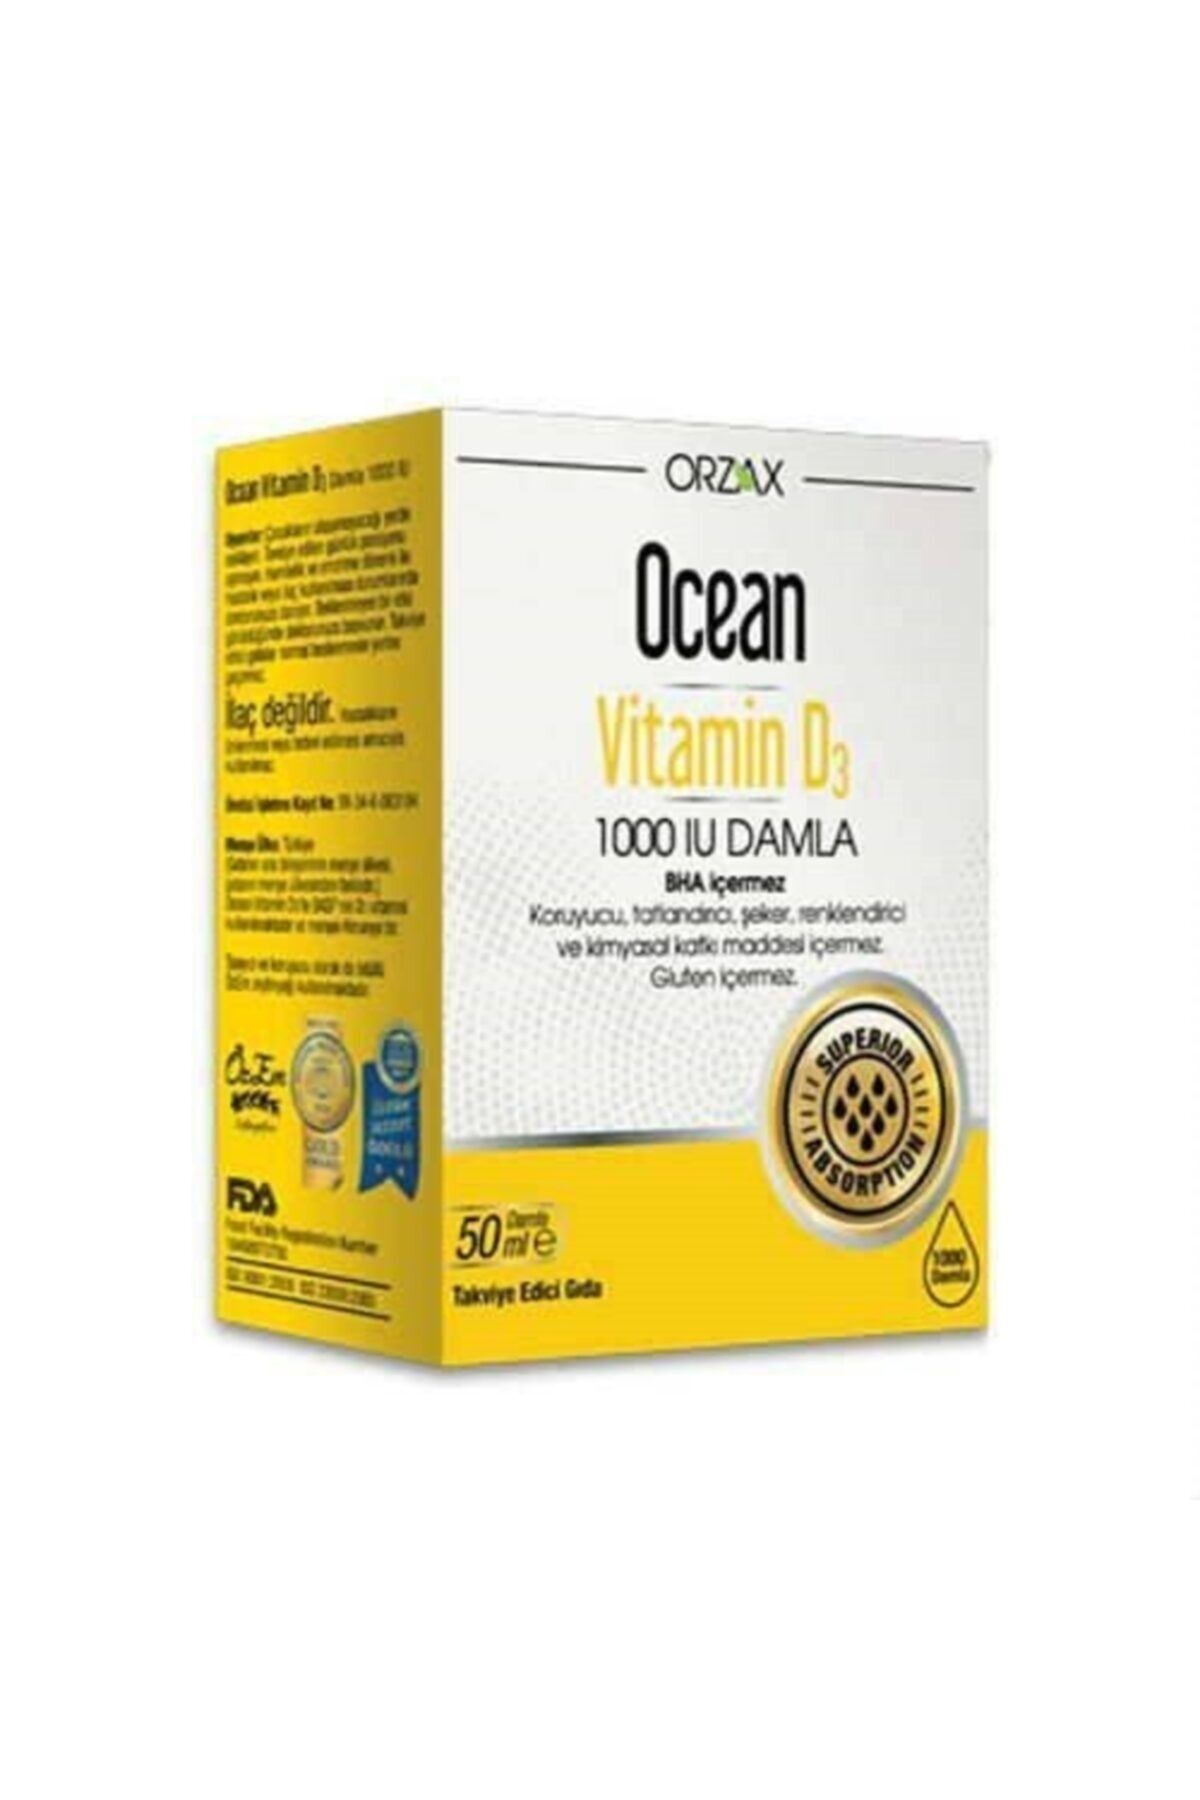 Ocean Vitamin D3 1000 Iu Damla 50 ml